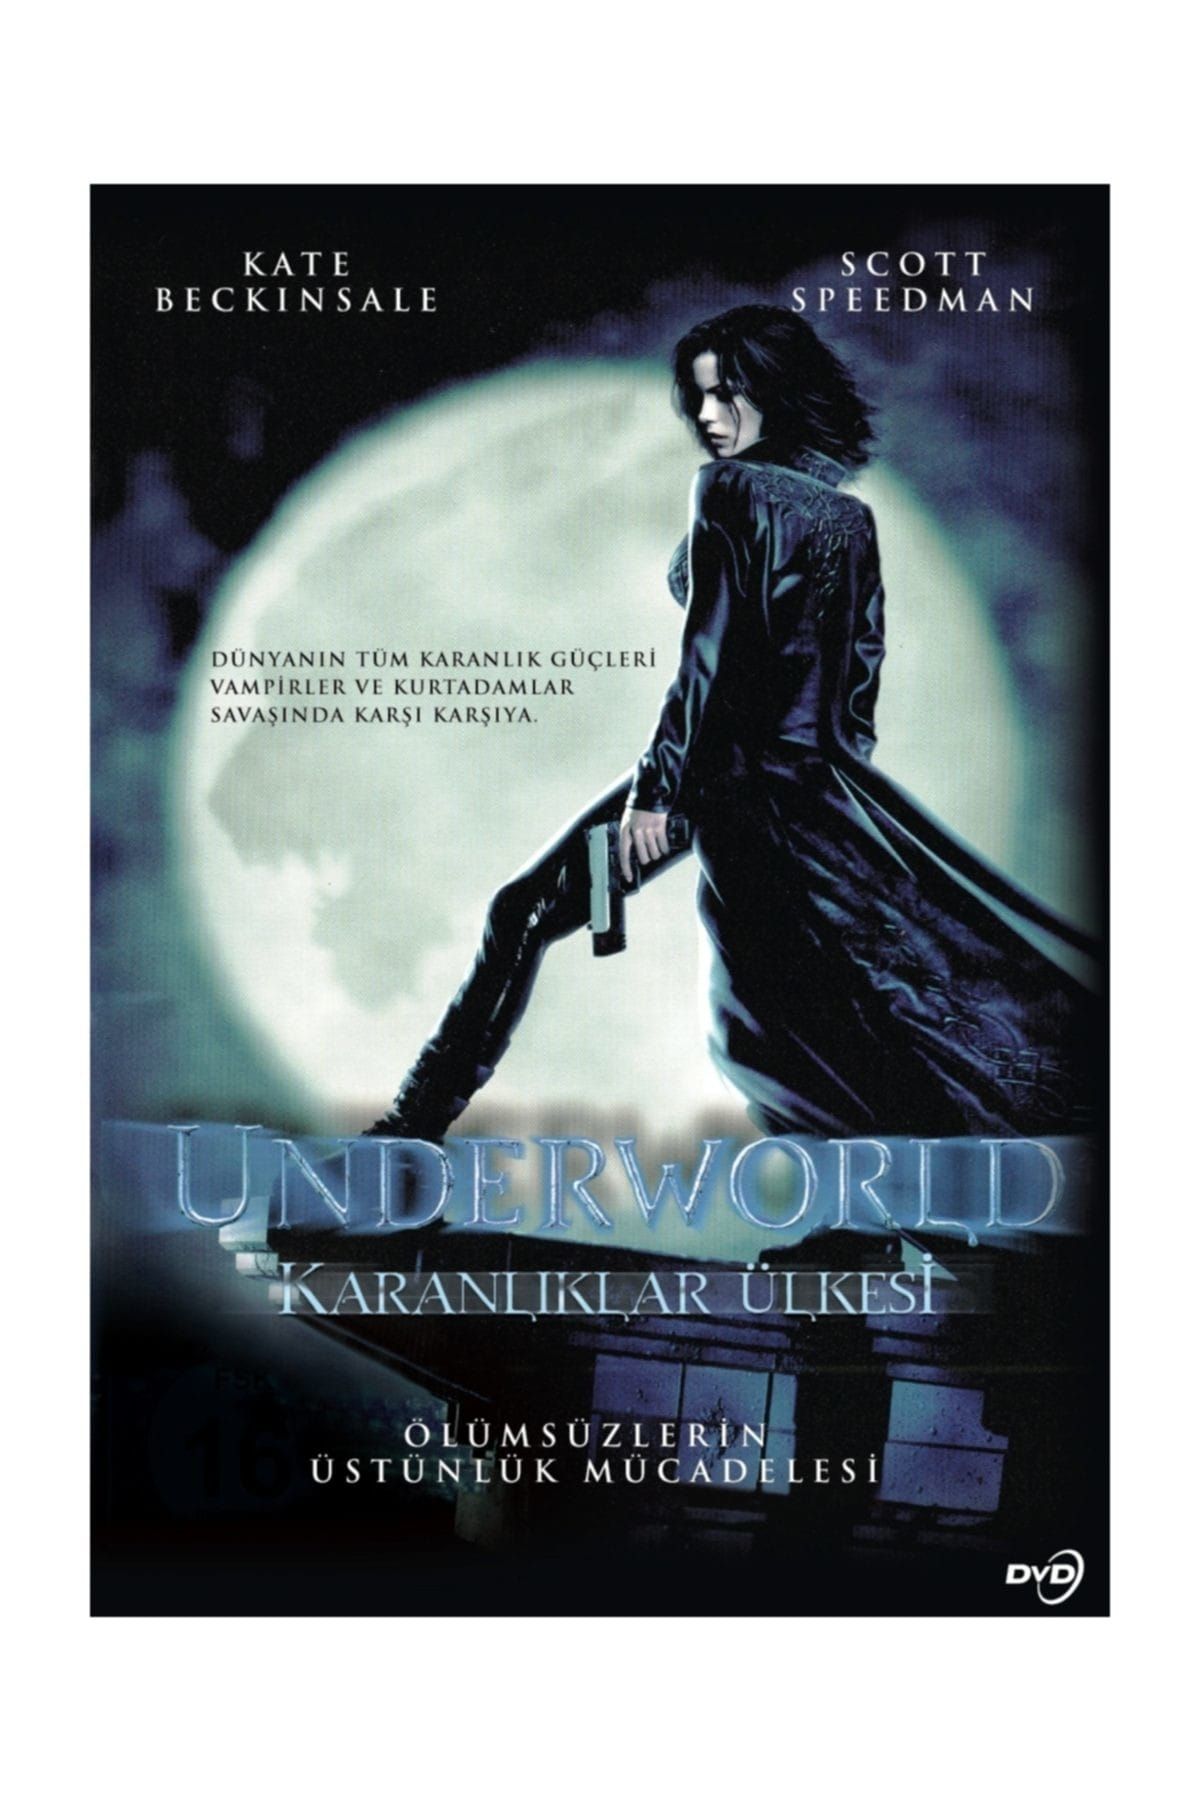 Underworld (2003) Theatrical Cut 448Kbps 23.976Fps 48Khz 5.1Ch DVD Turkish Audio TAC